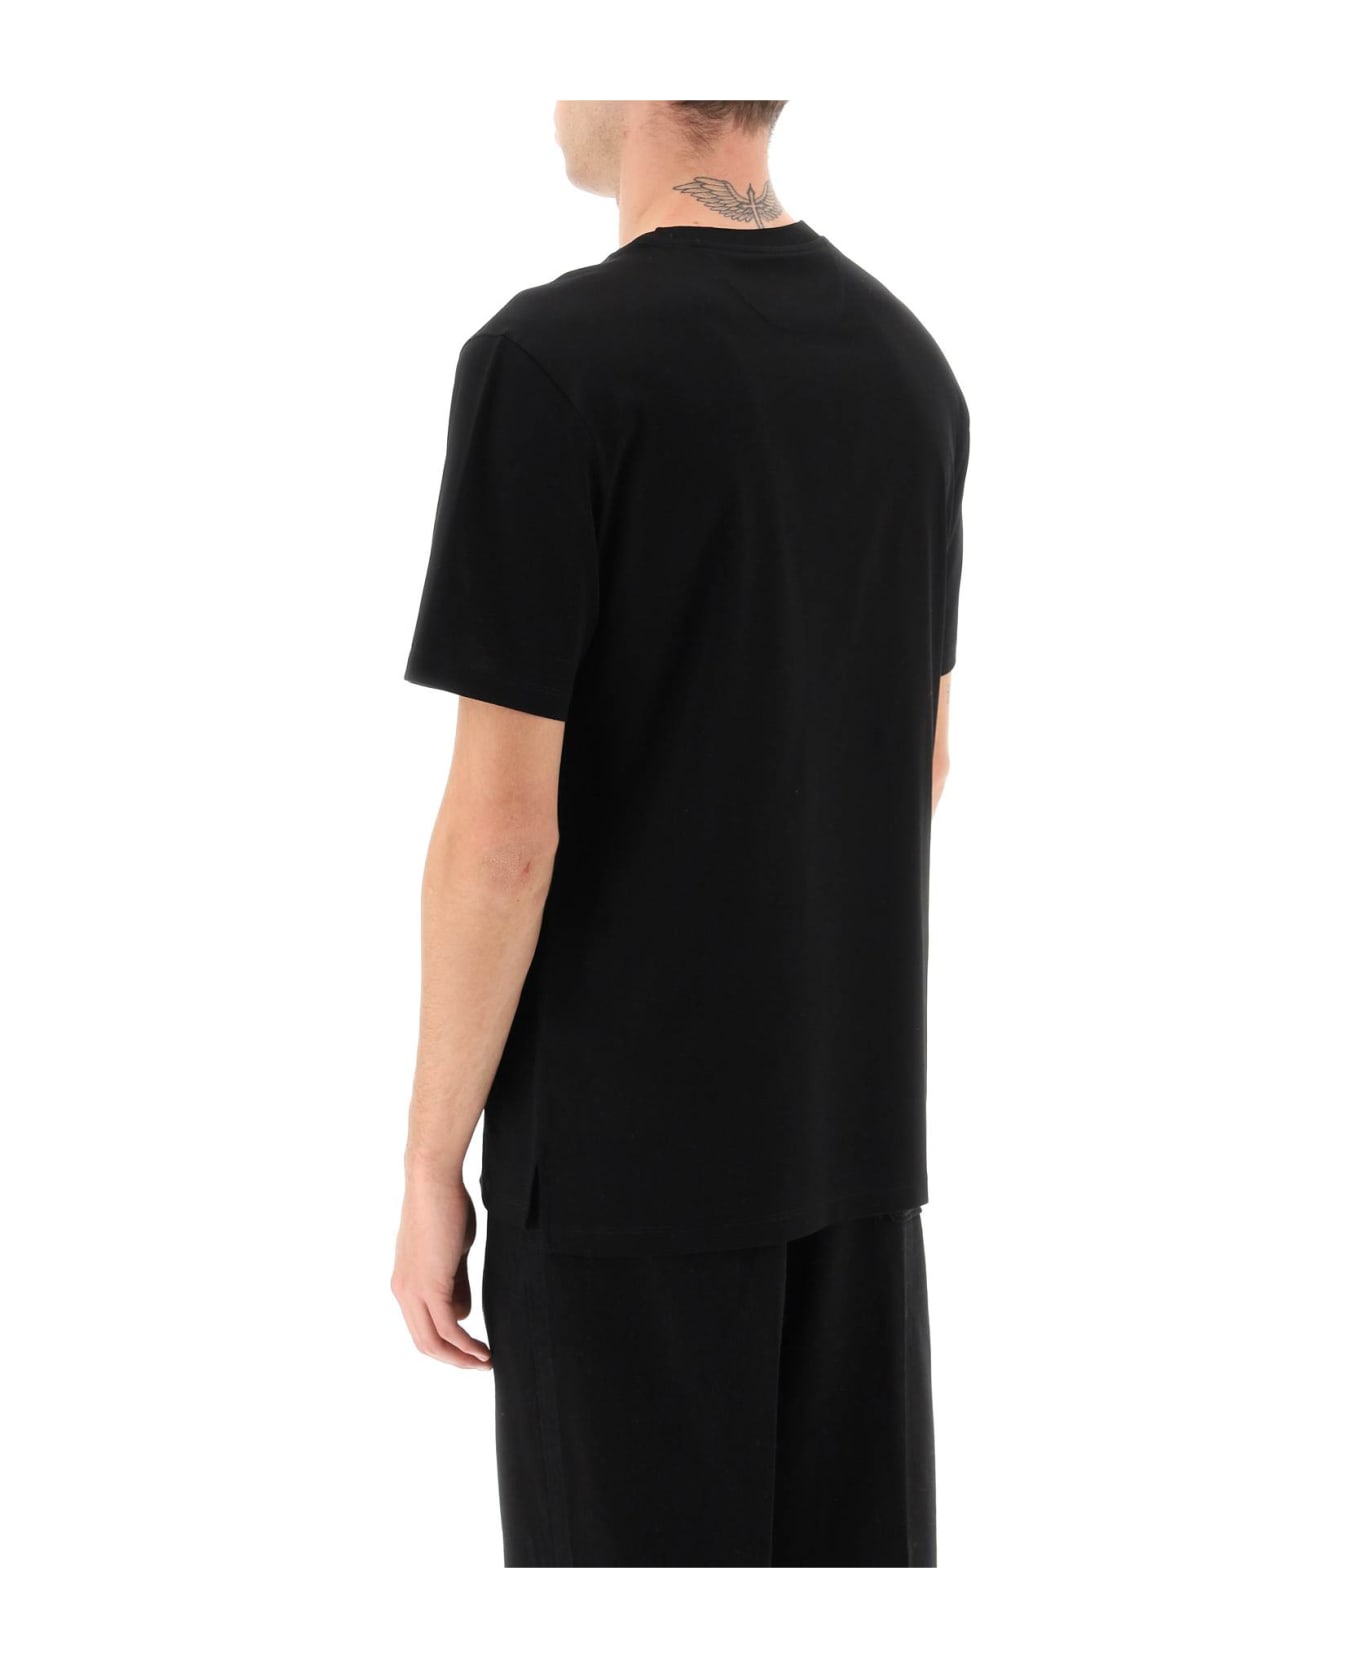 Paul Smith 'signature Stripe' Pocket T-shirt - BLACK (Black) シャツ